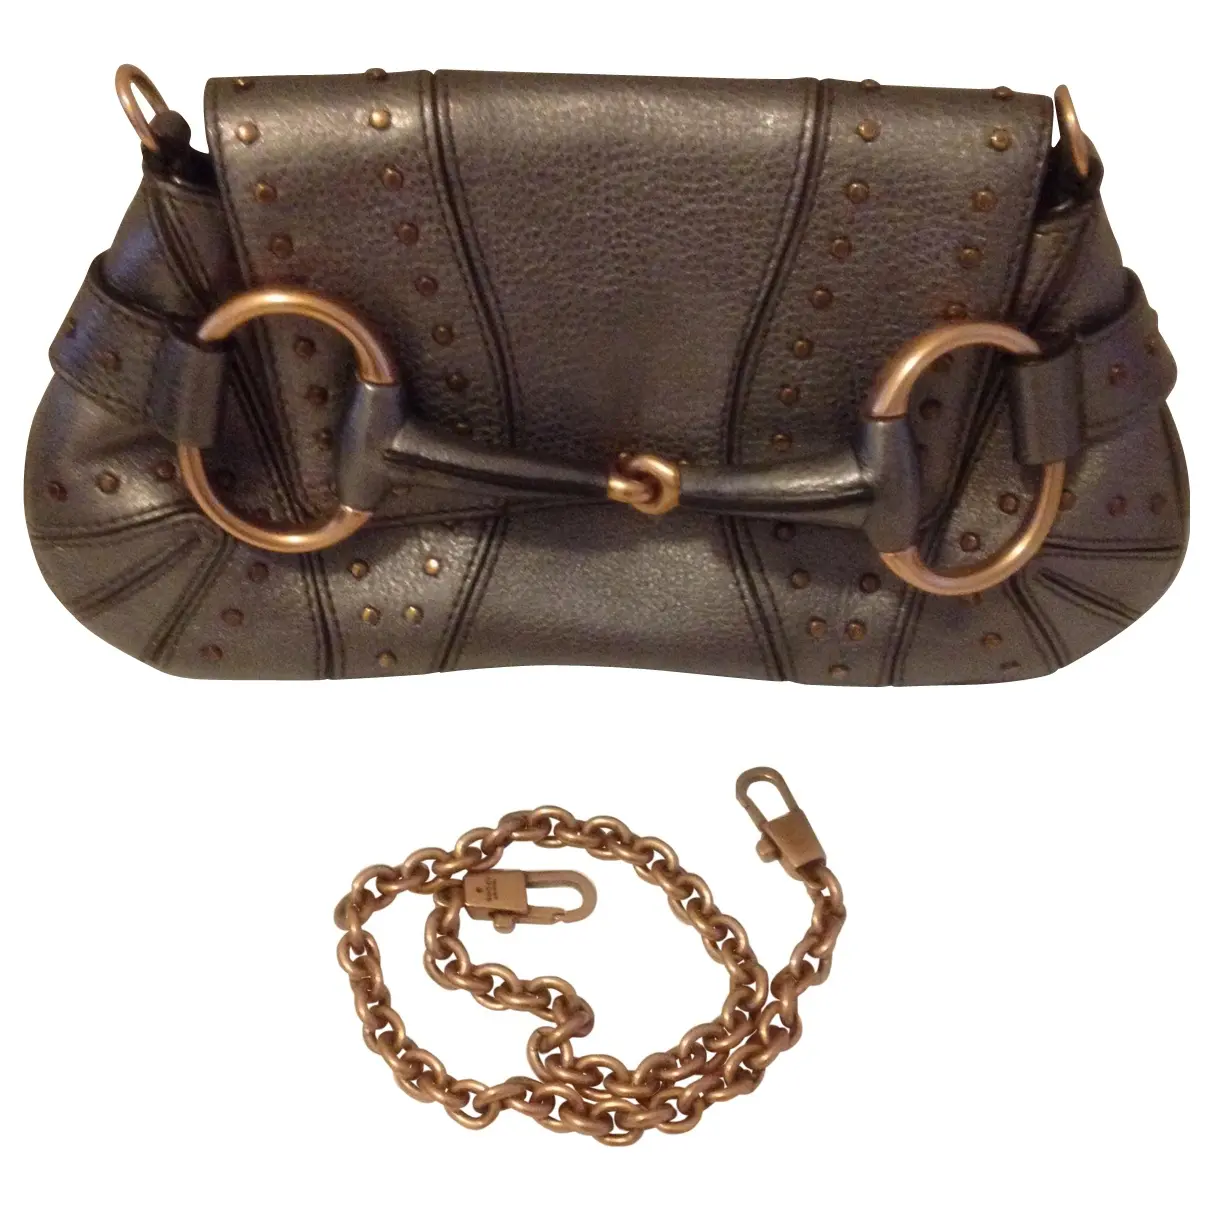 Gucci Metallic Leather Handbag for sale - Vintage